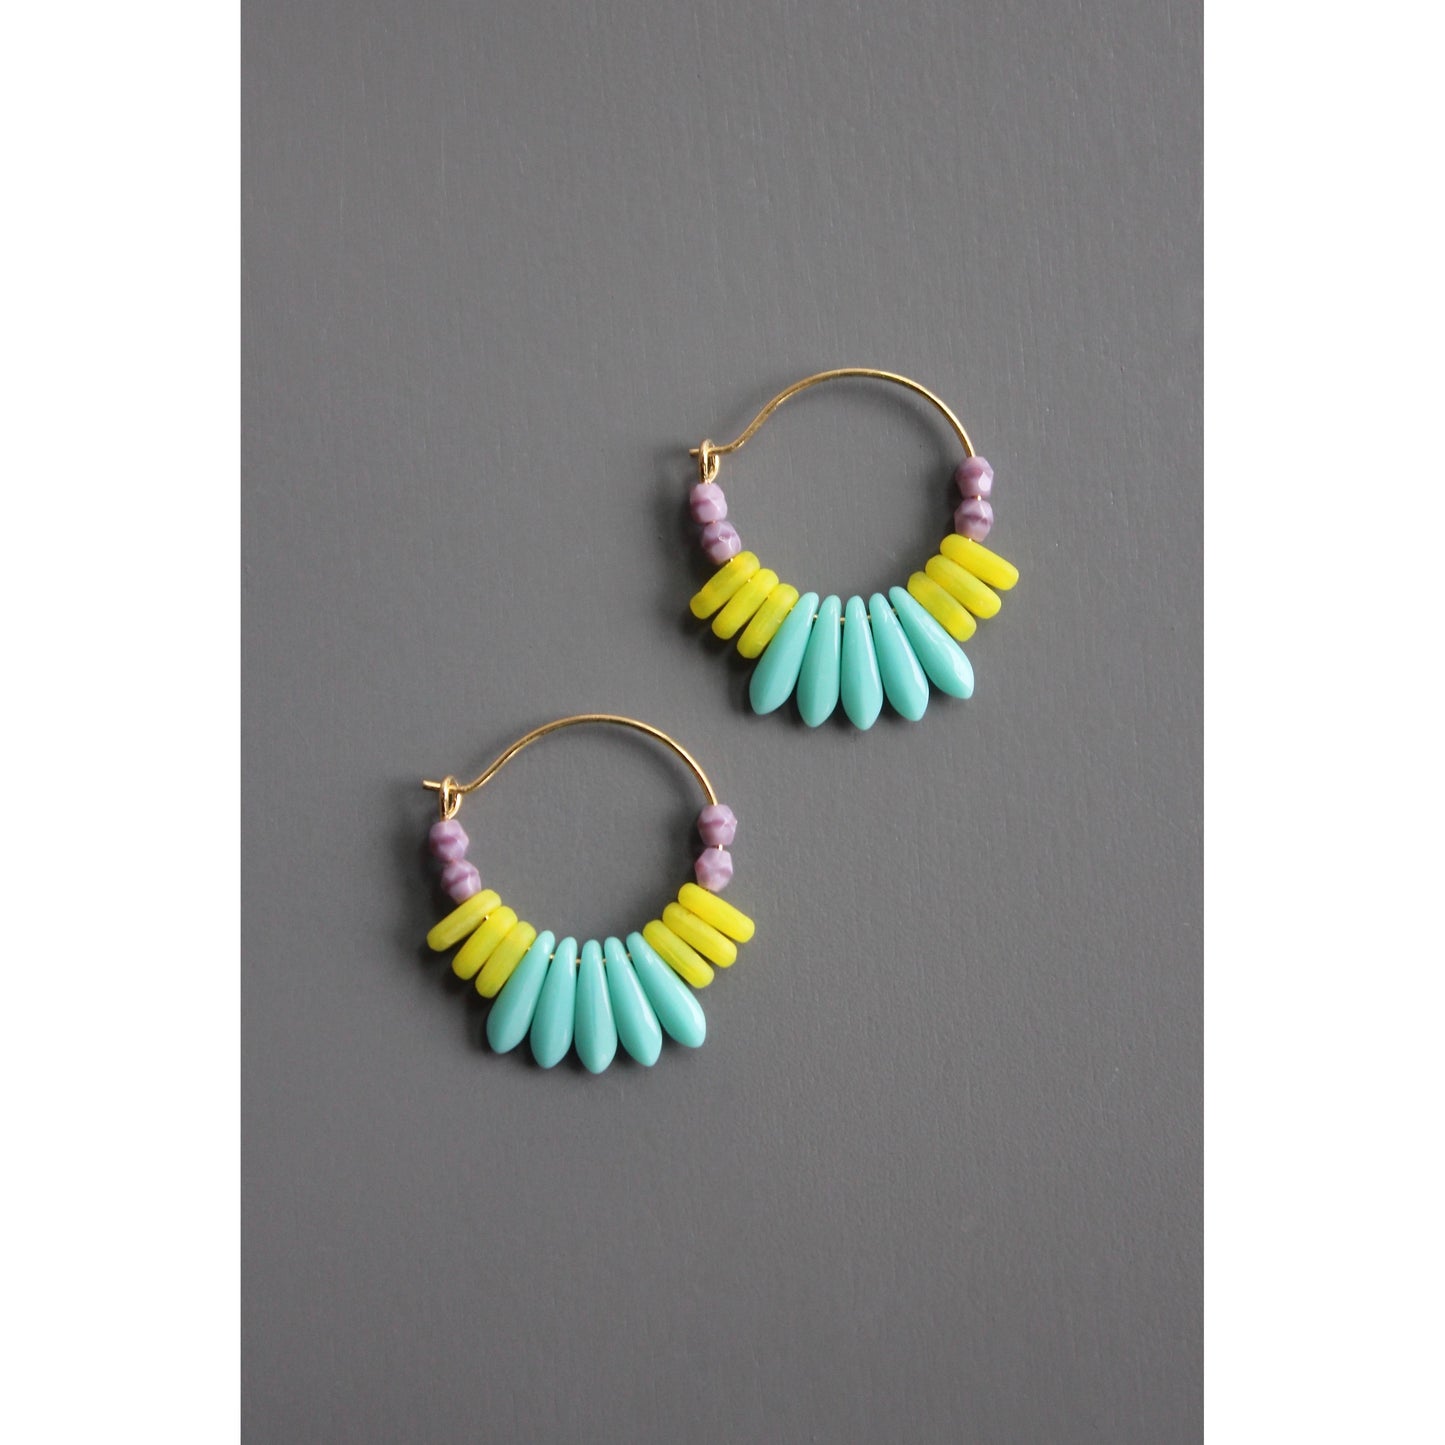 David Aubrey Jewelry - EMIE03 Turquoise, lavender,& neon yellow small hoop earrings